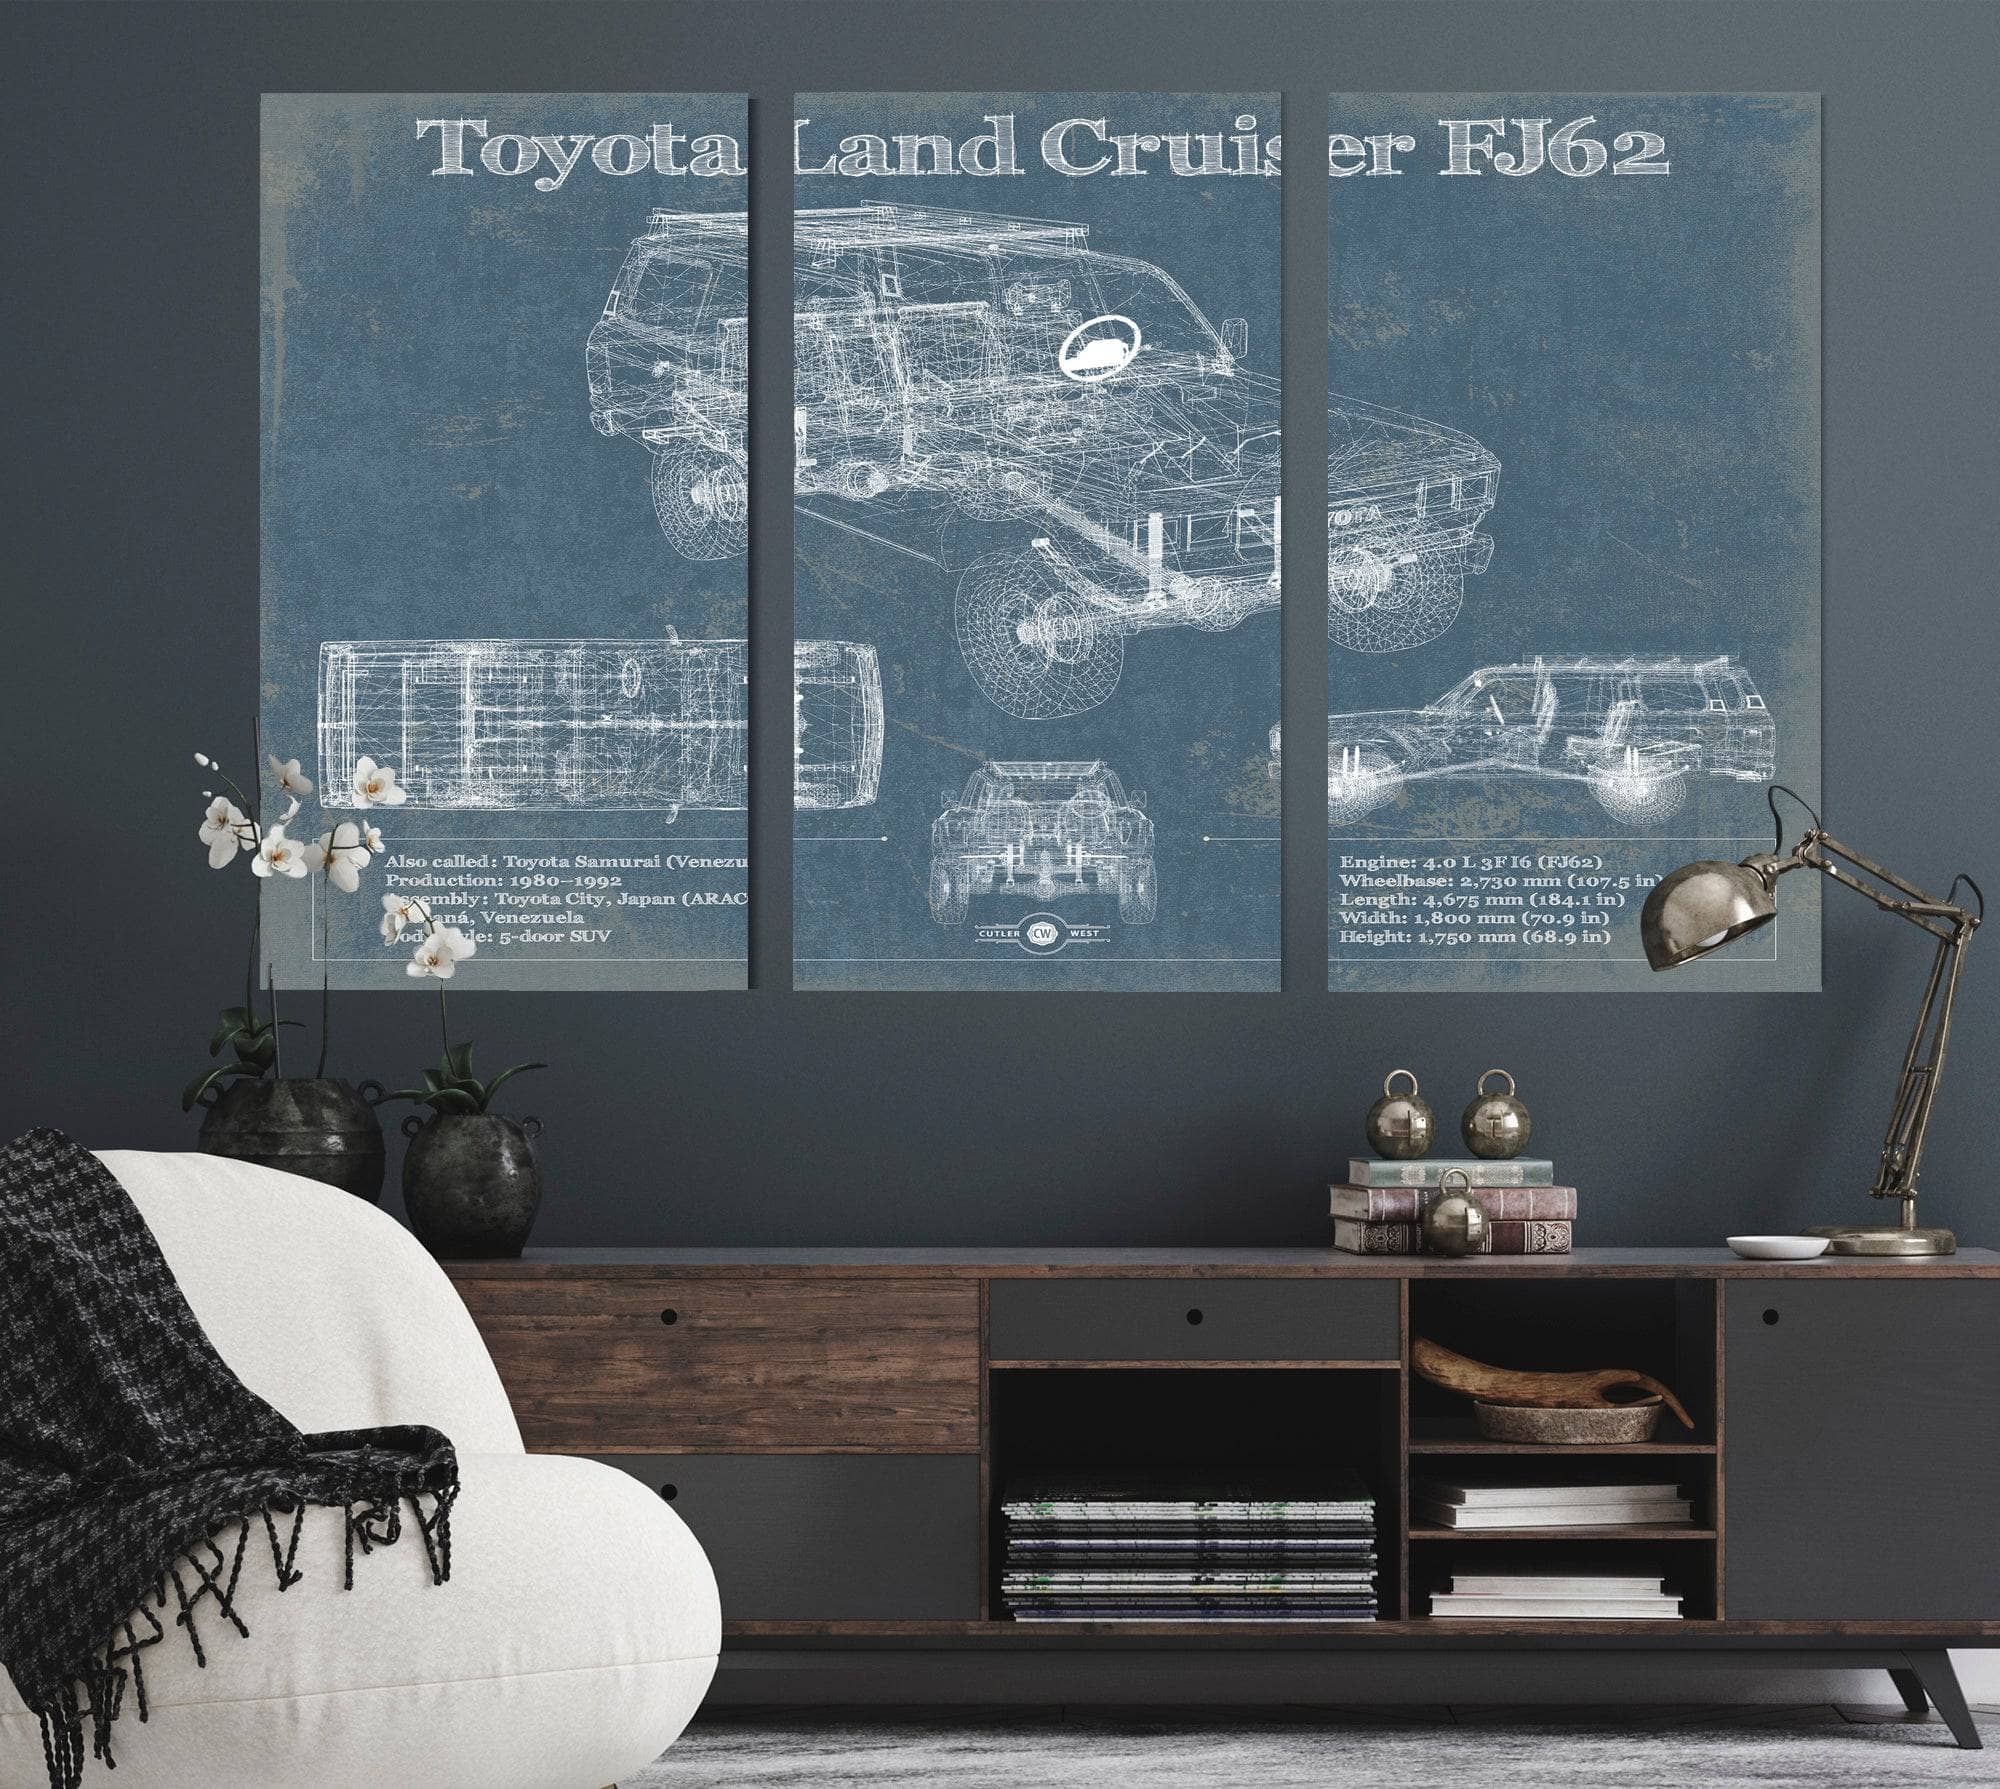 Toyota Land Cruiser FJ62 Blueprint Vintage Auto Print